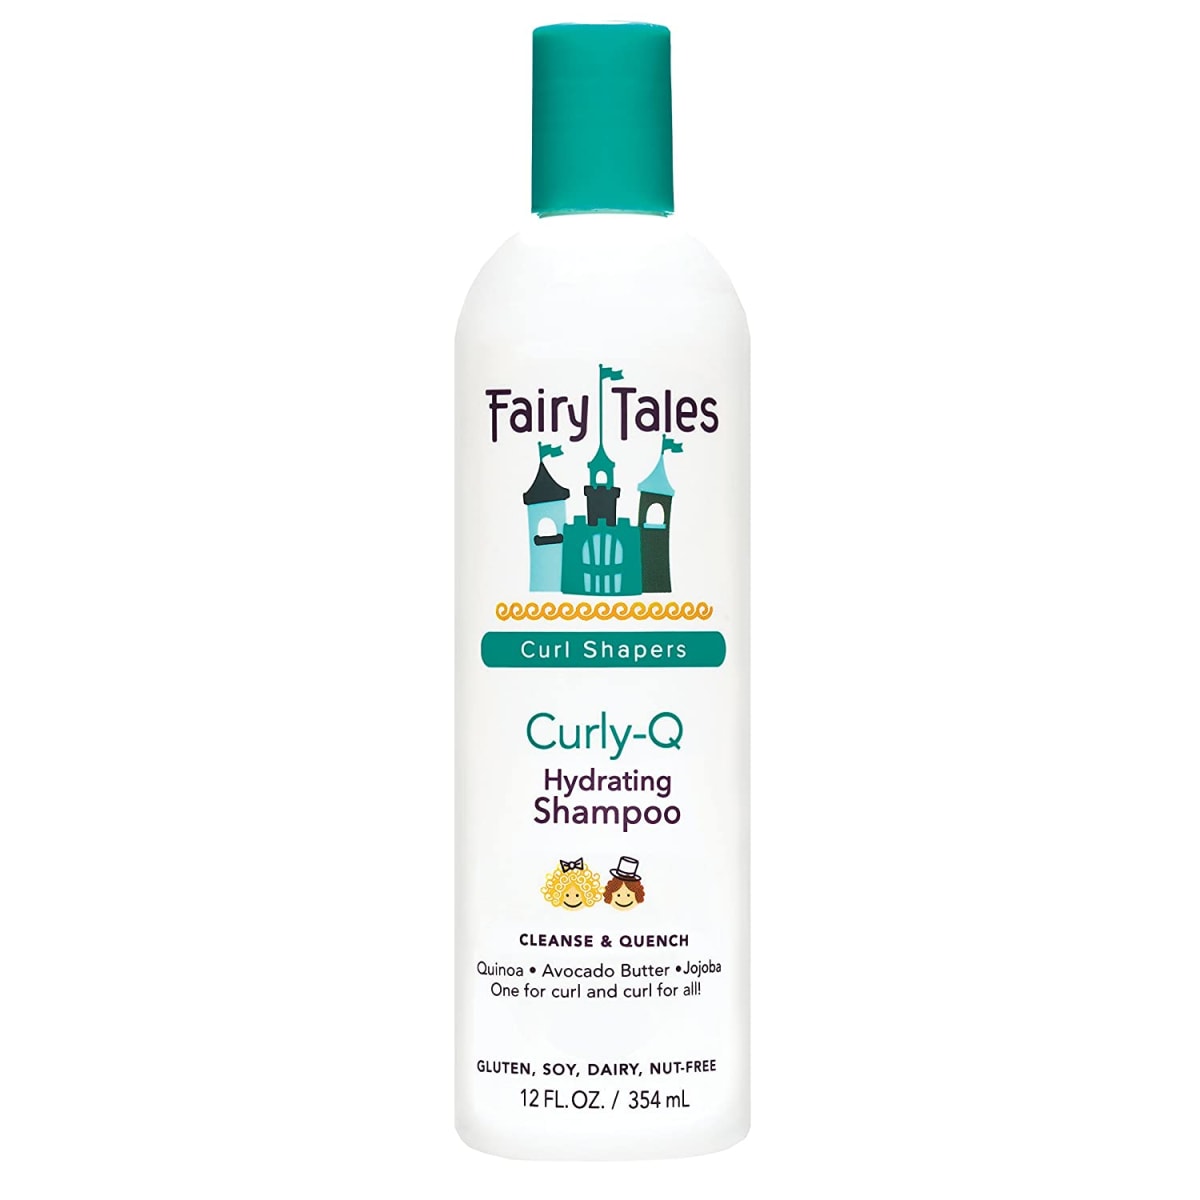 Curly-q Daily Hydrating Shampoo